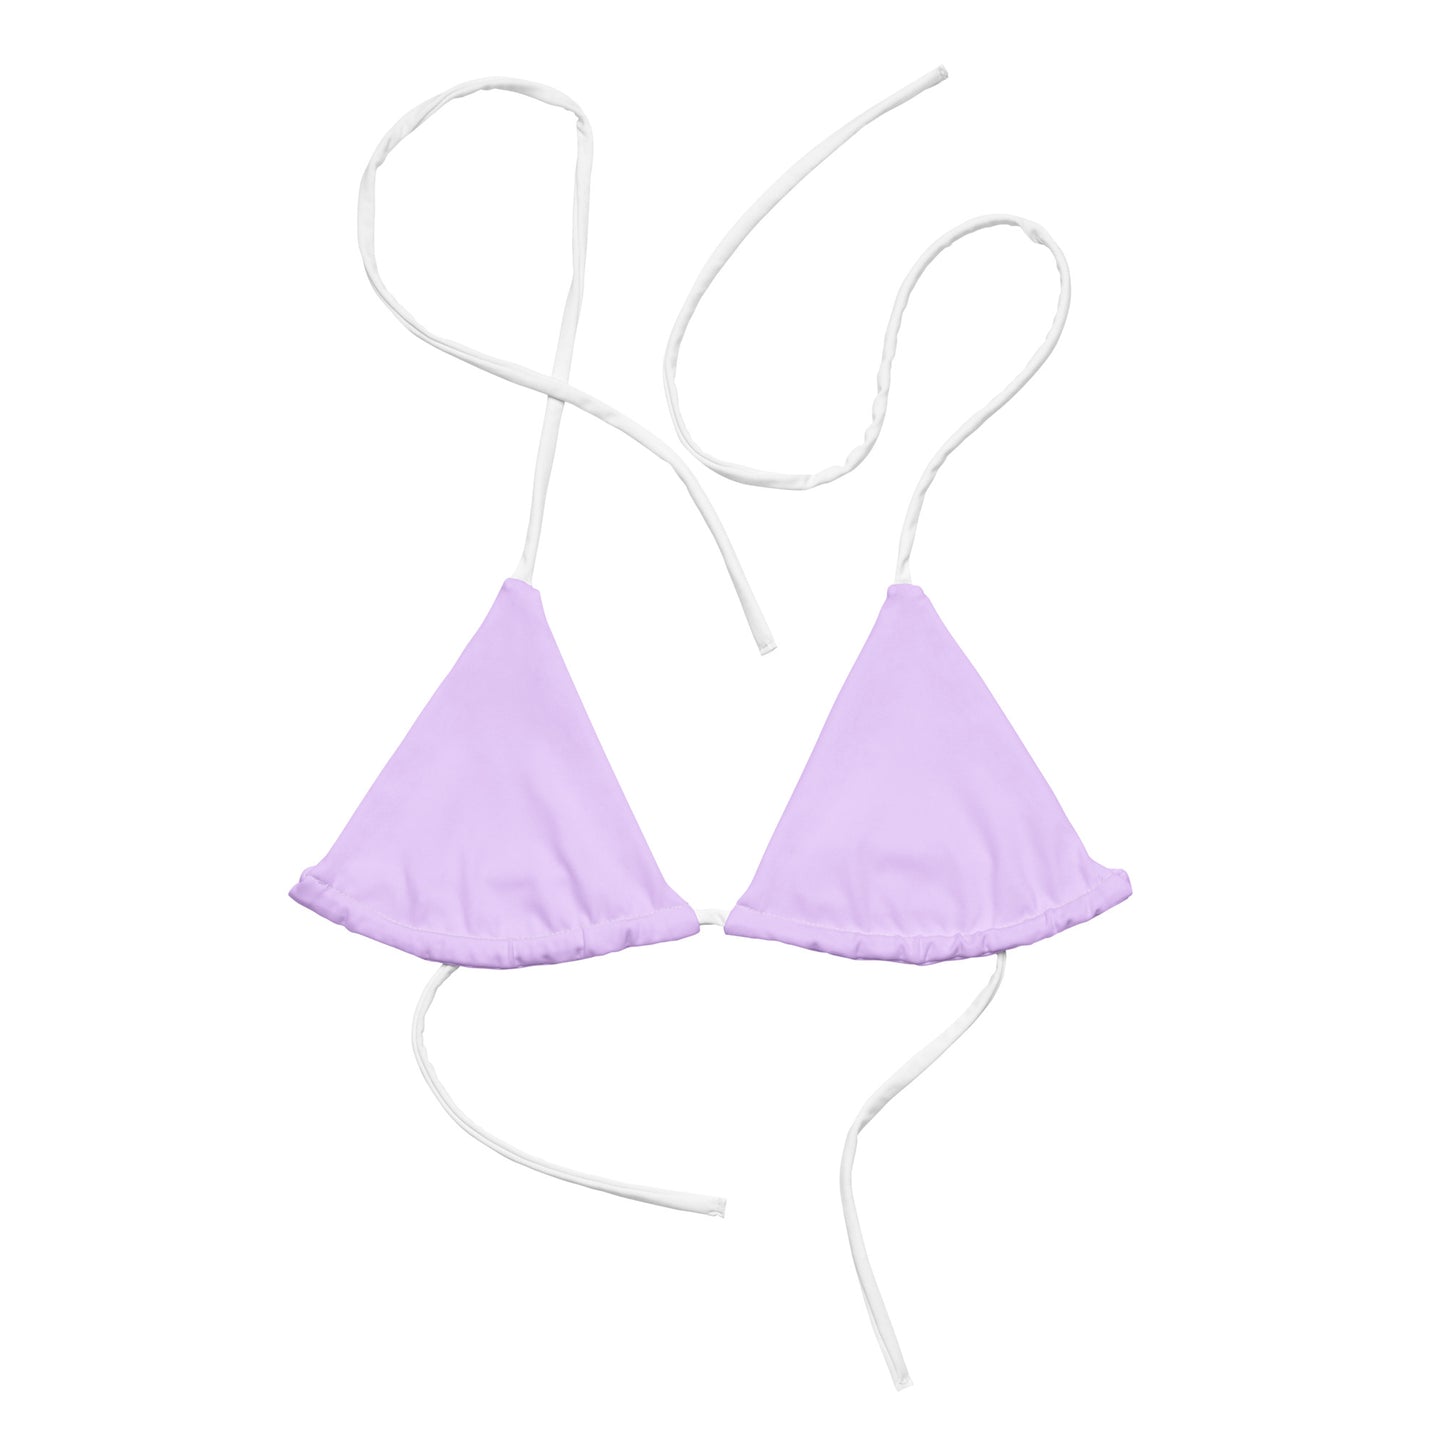 String Bikini Top | Pastel Lilac by aisoi Swimwear & Beachwear 